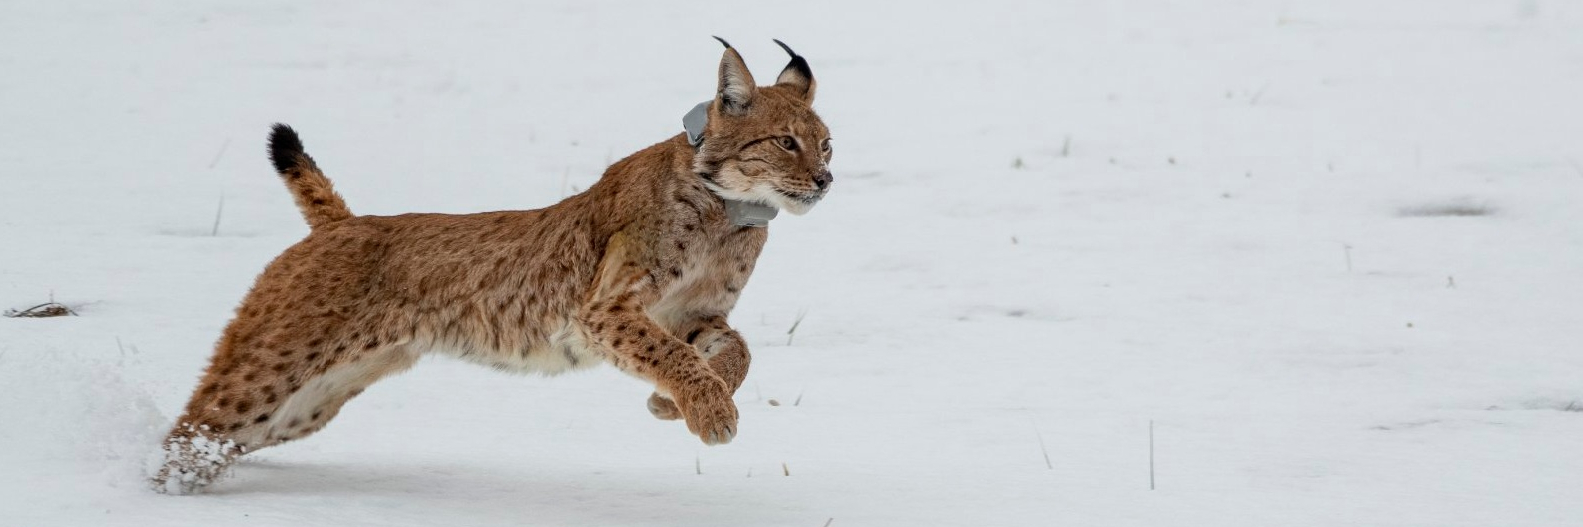 Lynx running in the snow.